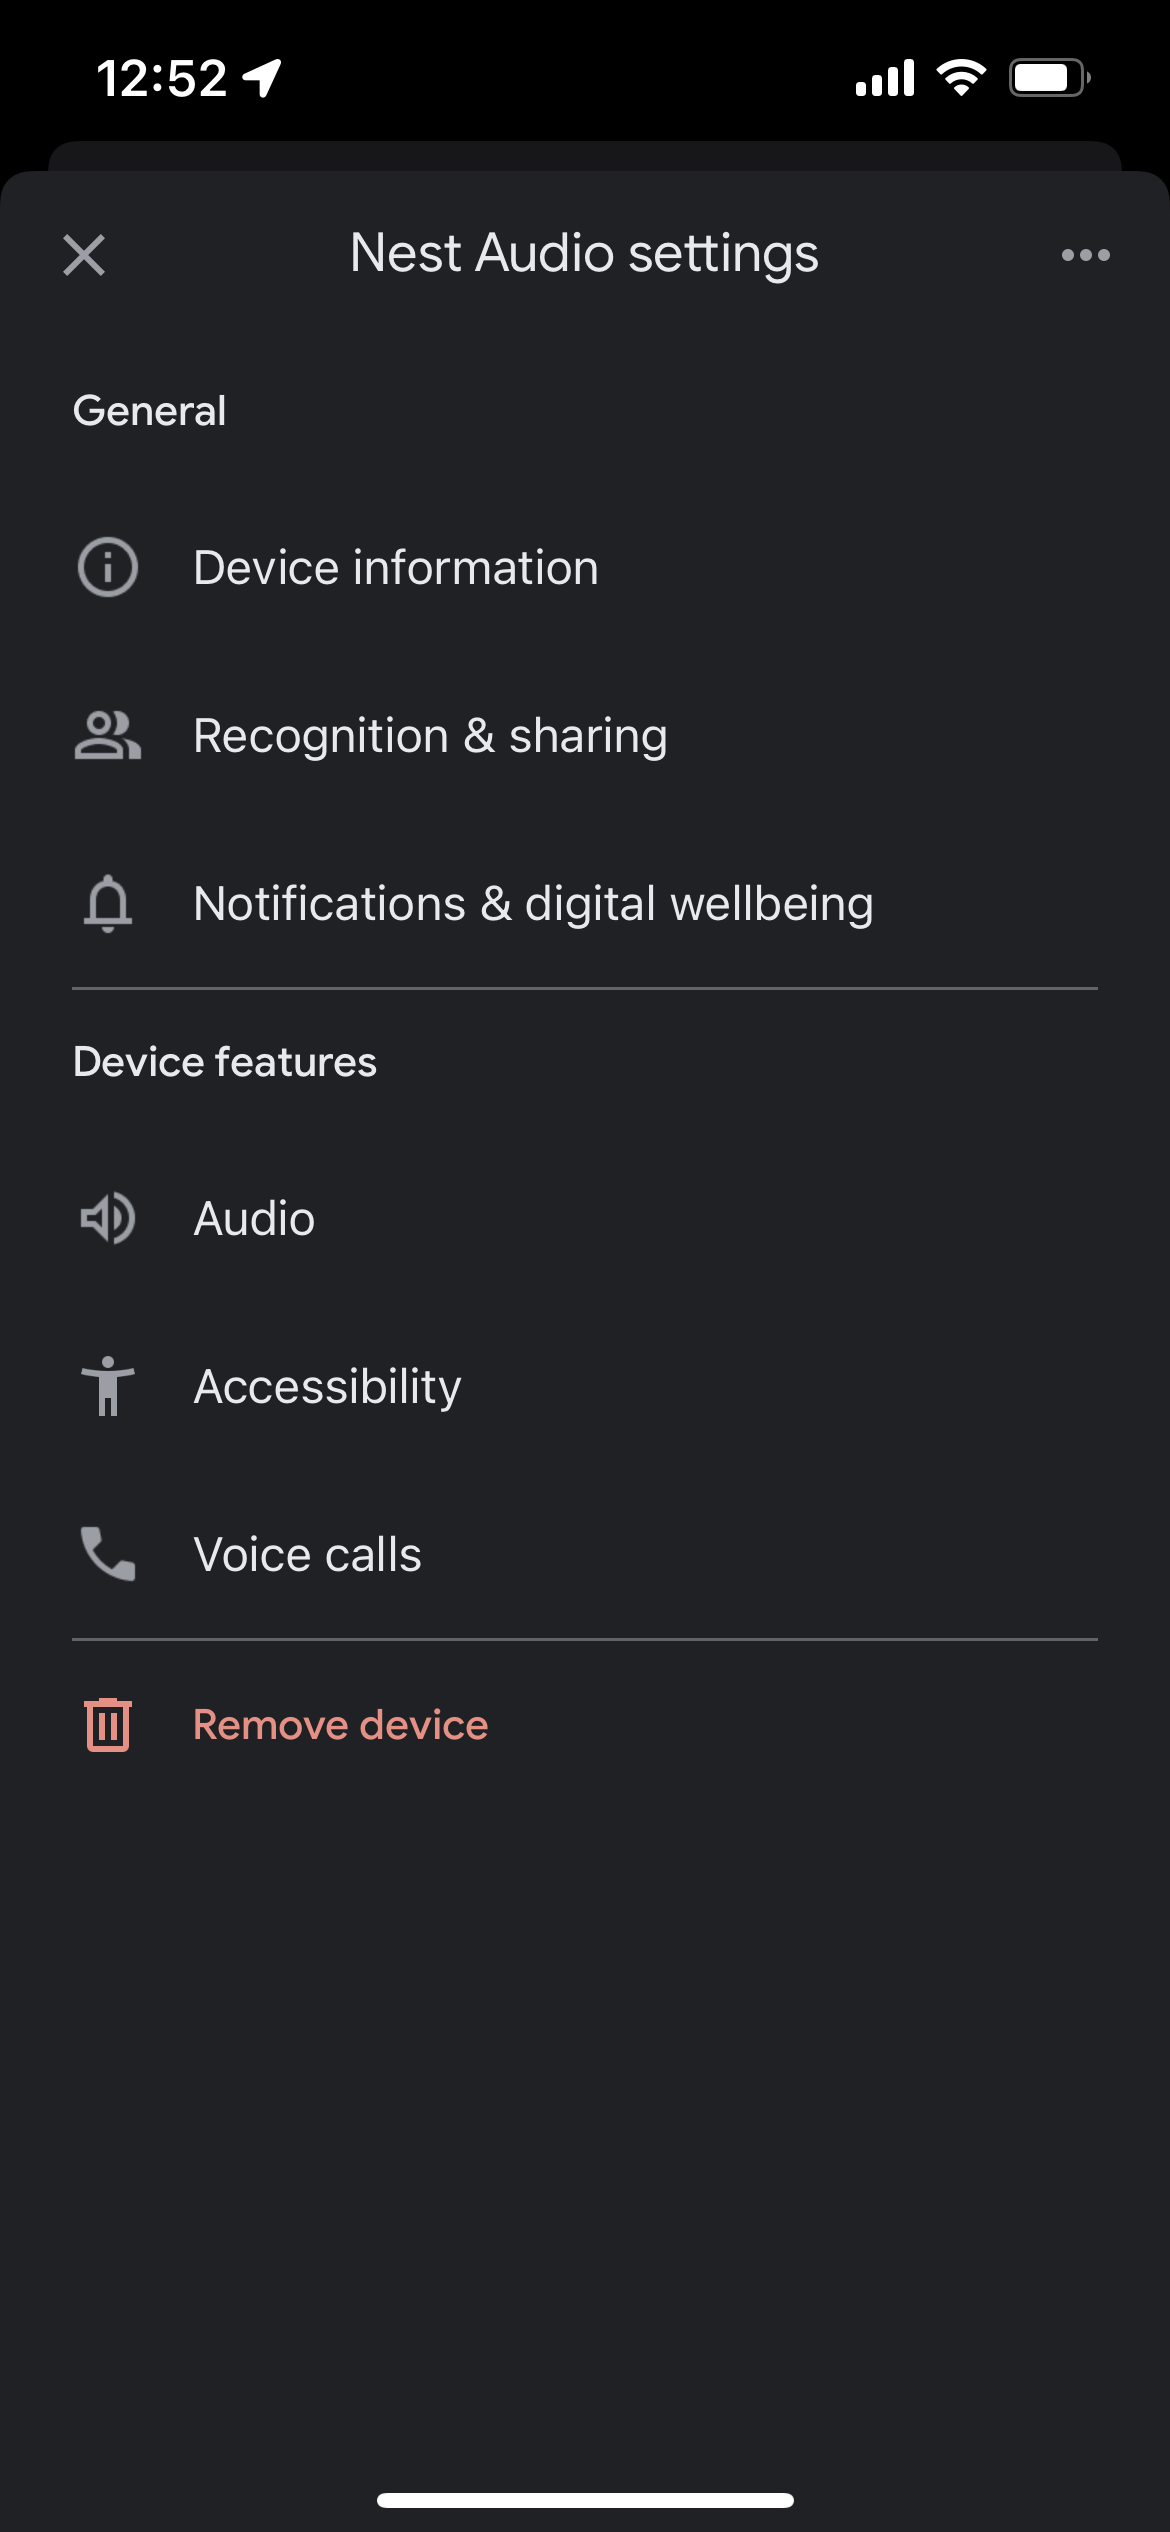 Nest Audio settings in Google Home